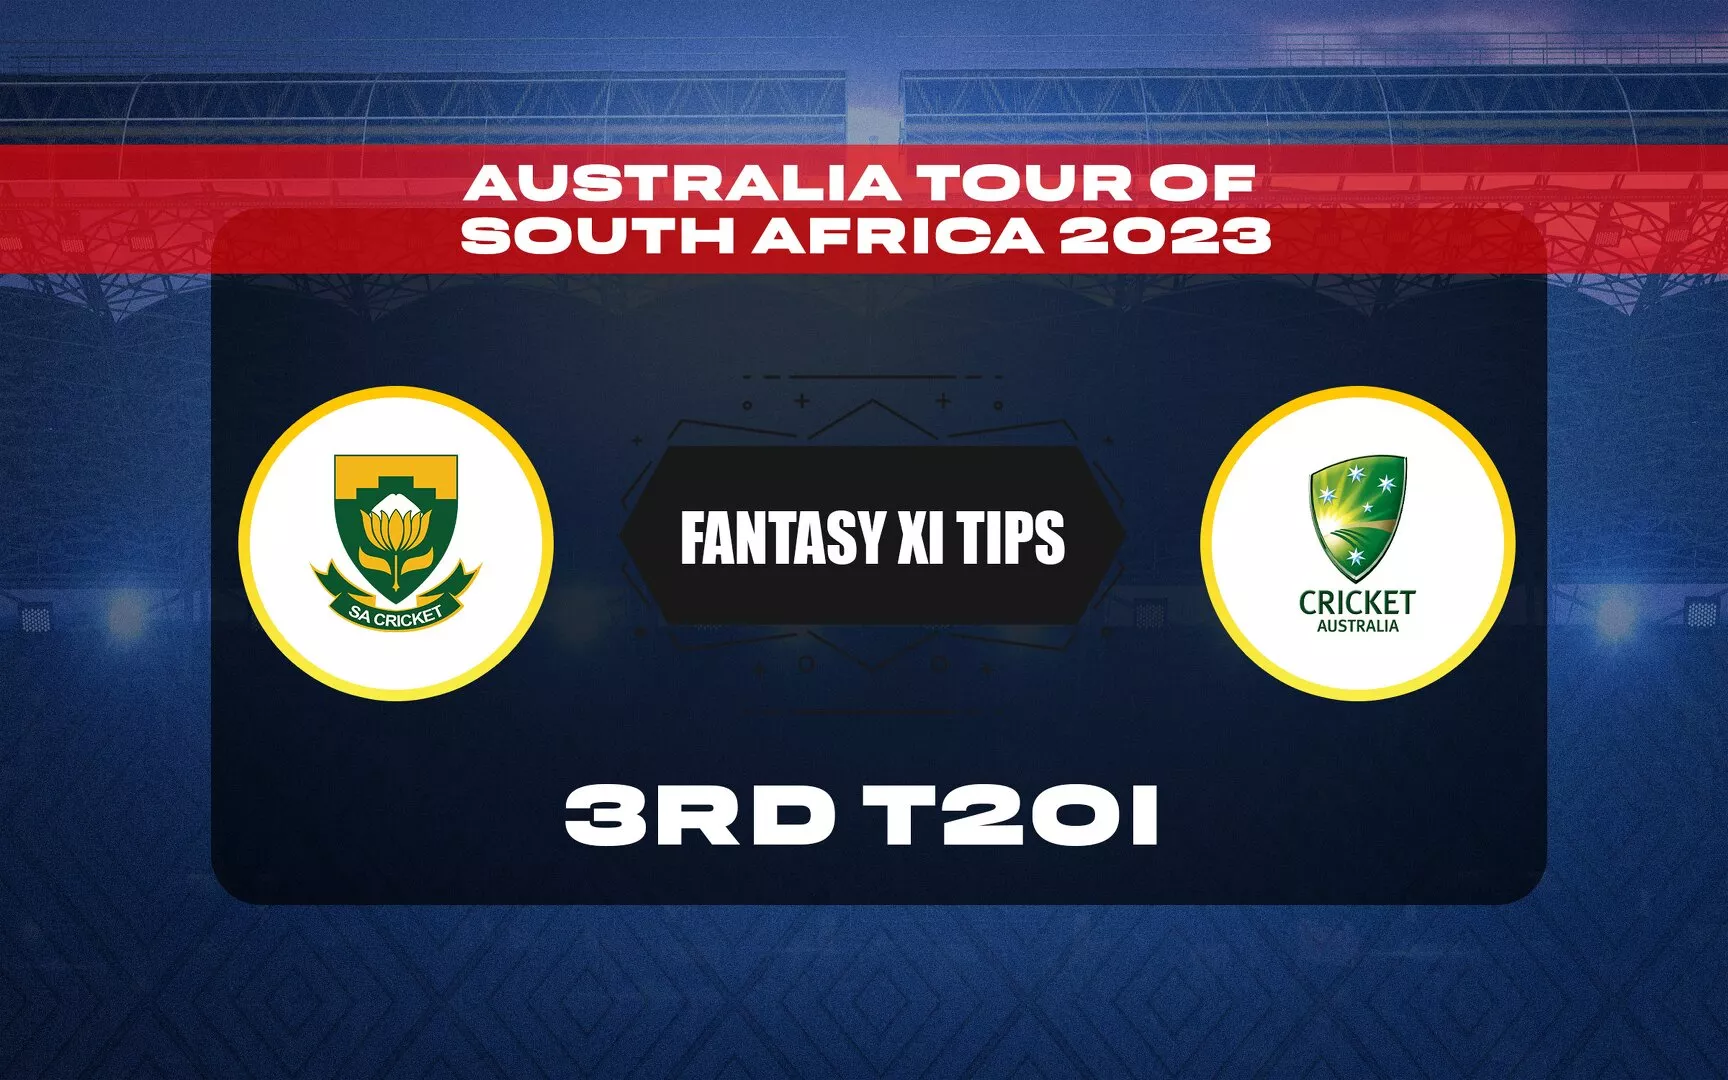 SA vs AUS Dream11 Prediction, Dream11 Playing XI, Today 3rd T20I, Australia tour of South Africa 2023